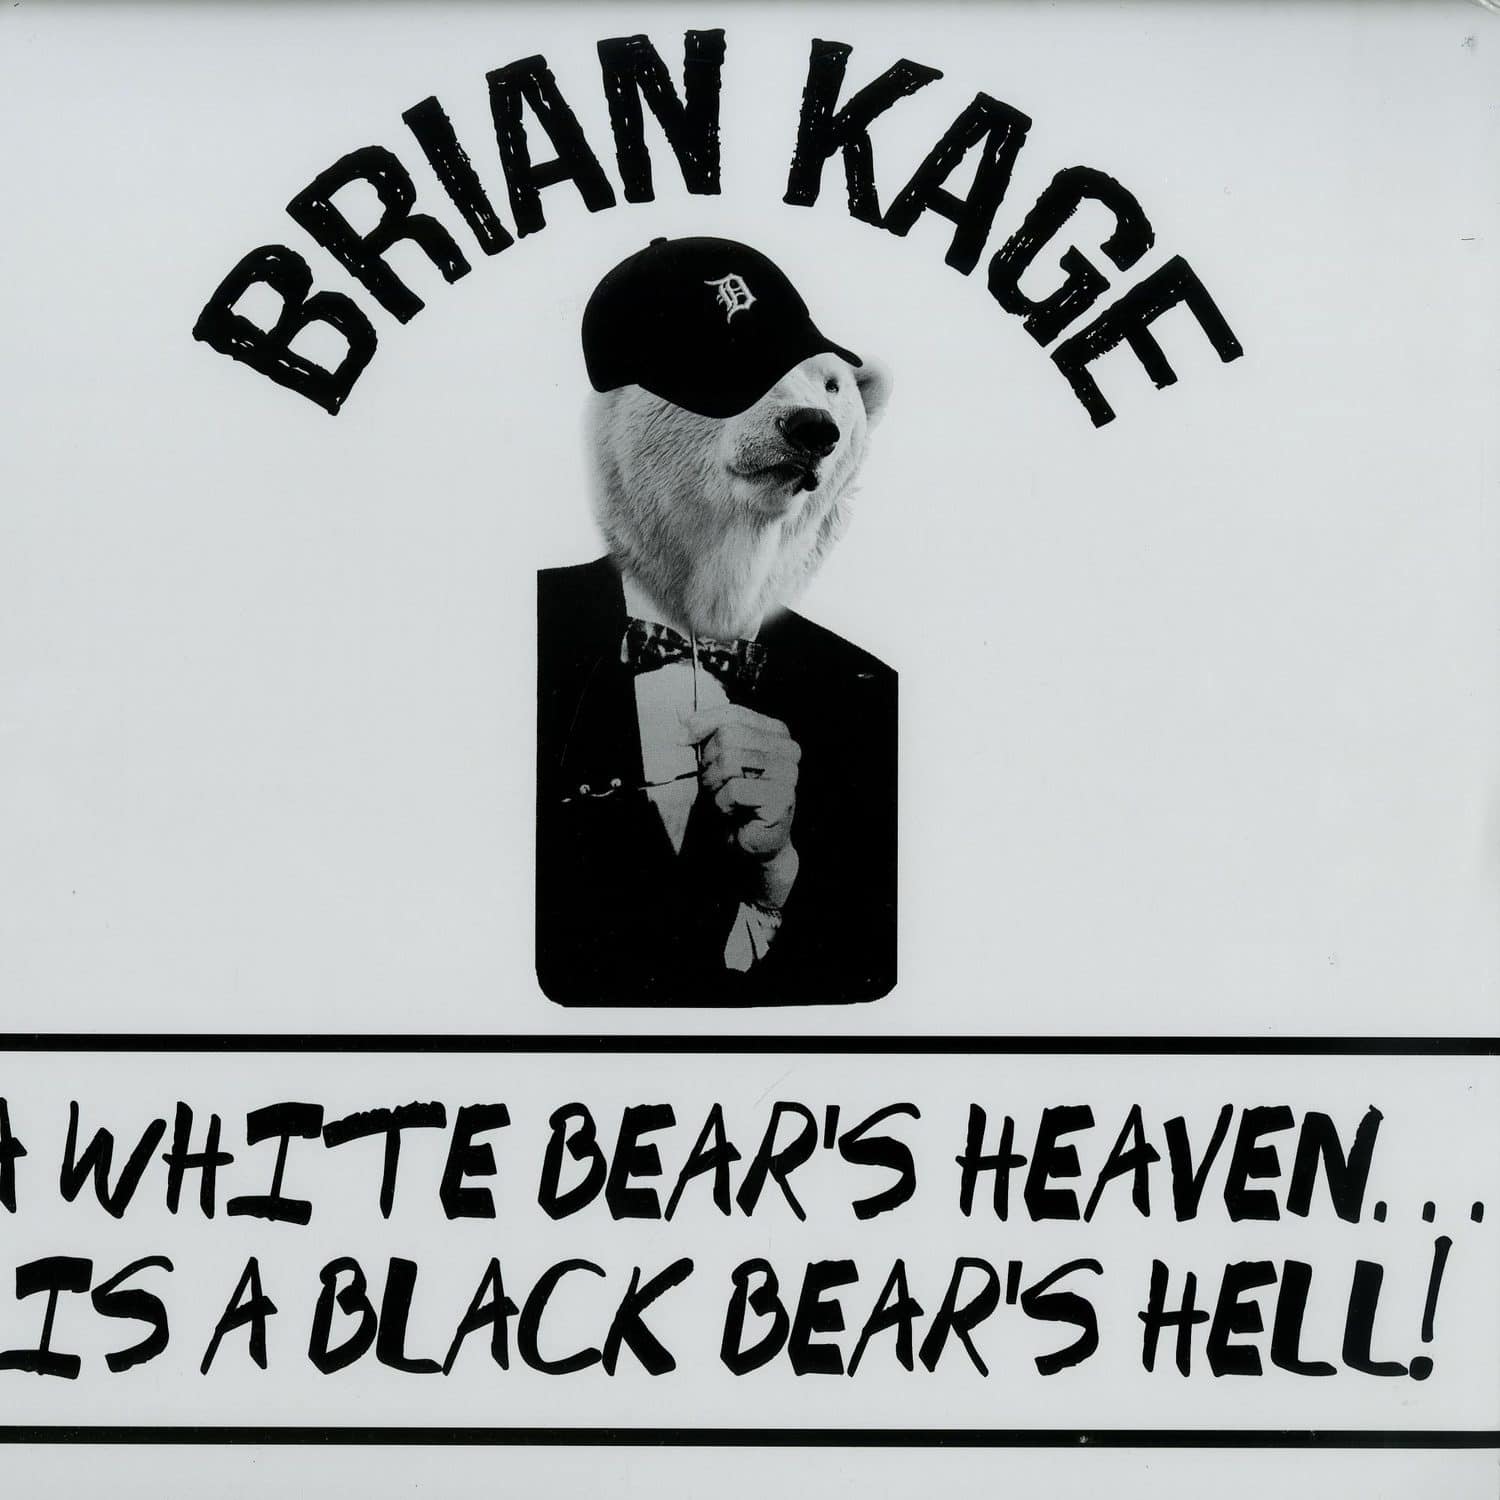 Brian Kage - A WHITE BEARS HEAVEN ... ITS A BLACK BEARS HELL